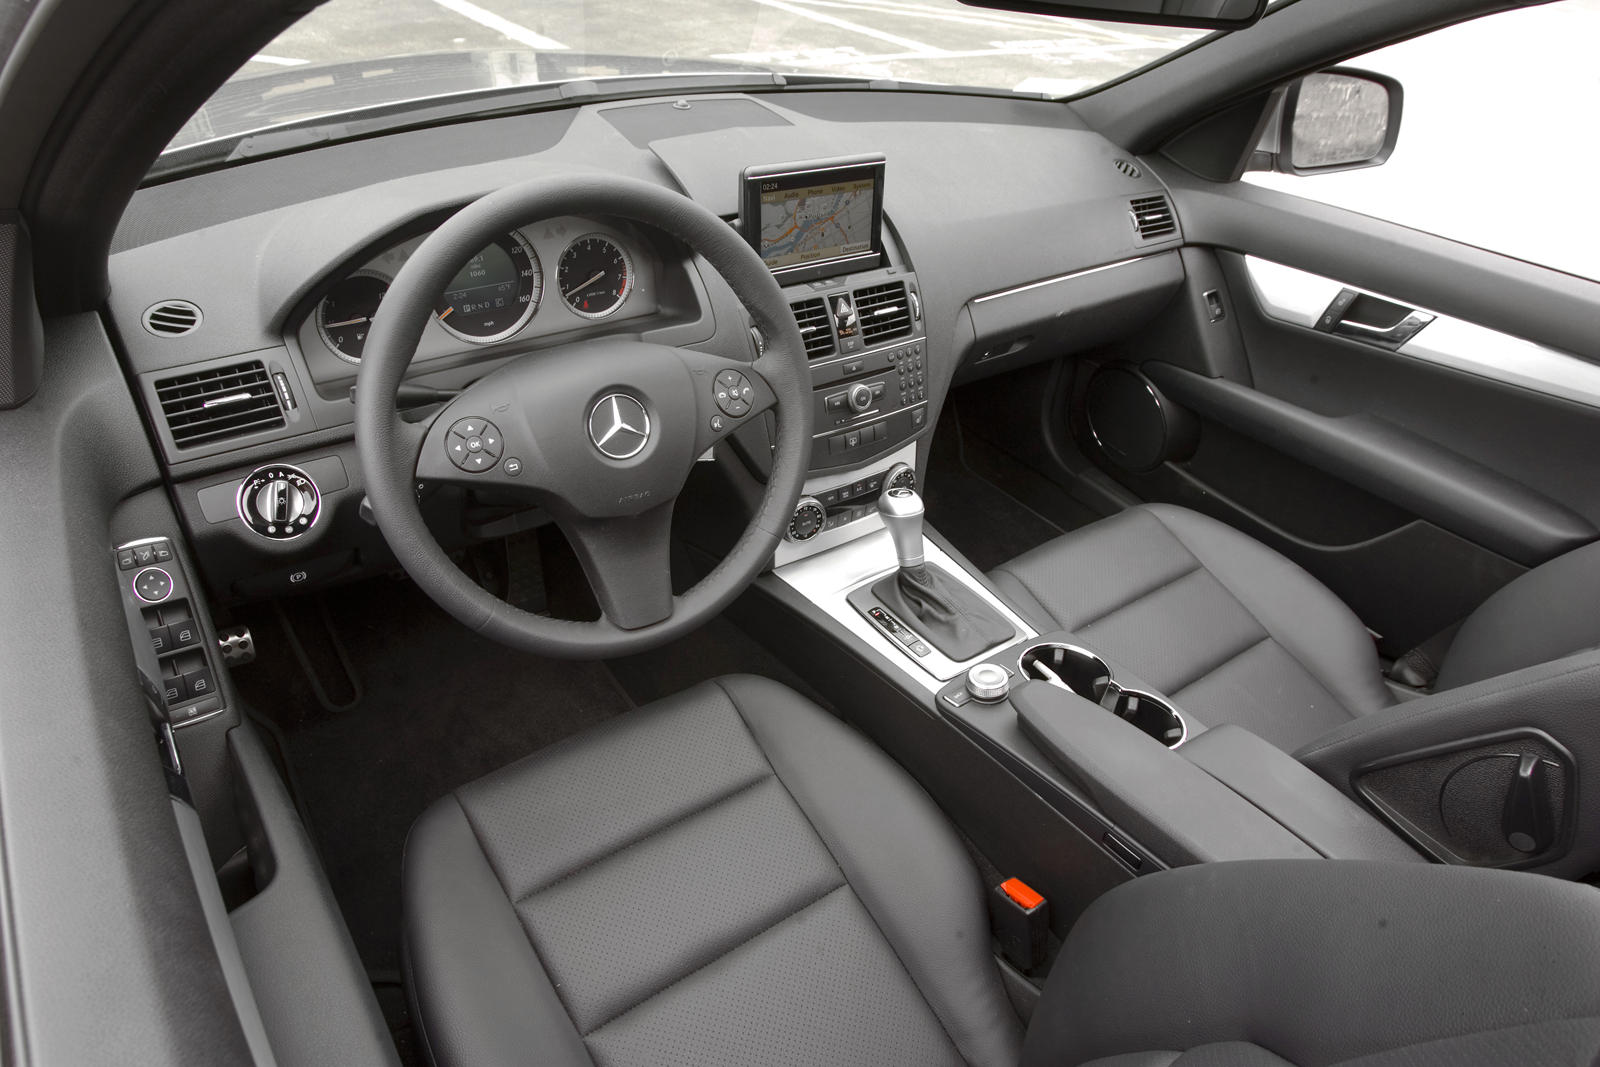 2010 Mercedes-Benz C-Class Sedan Dashboard